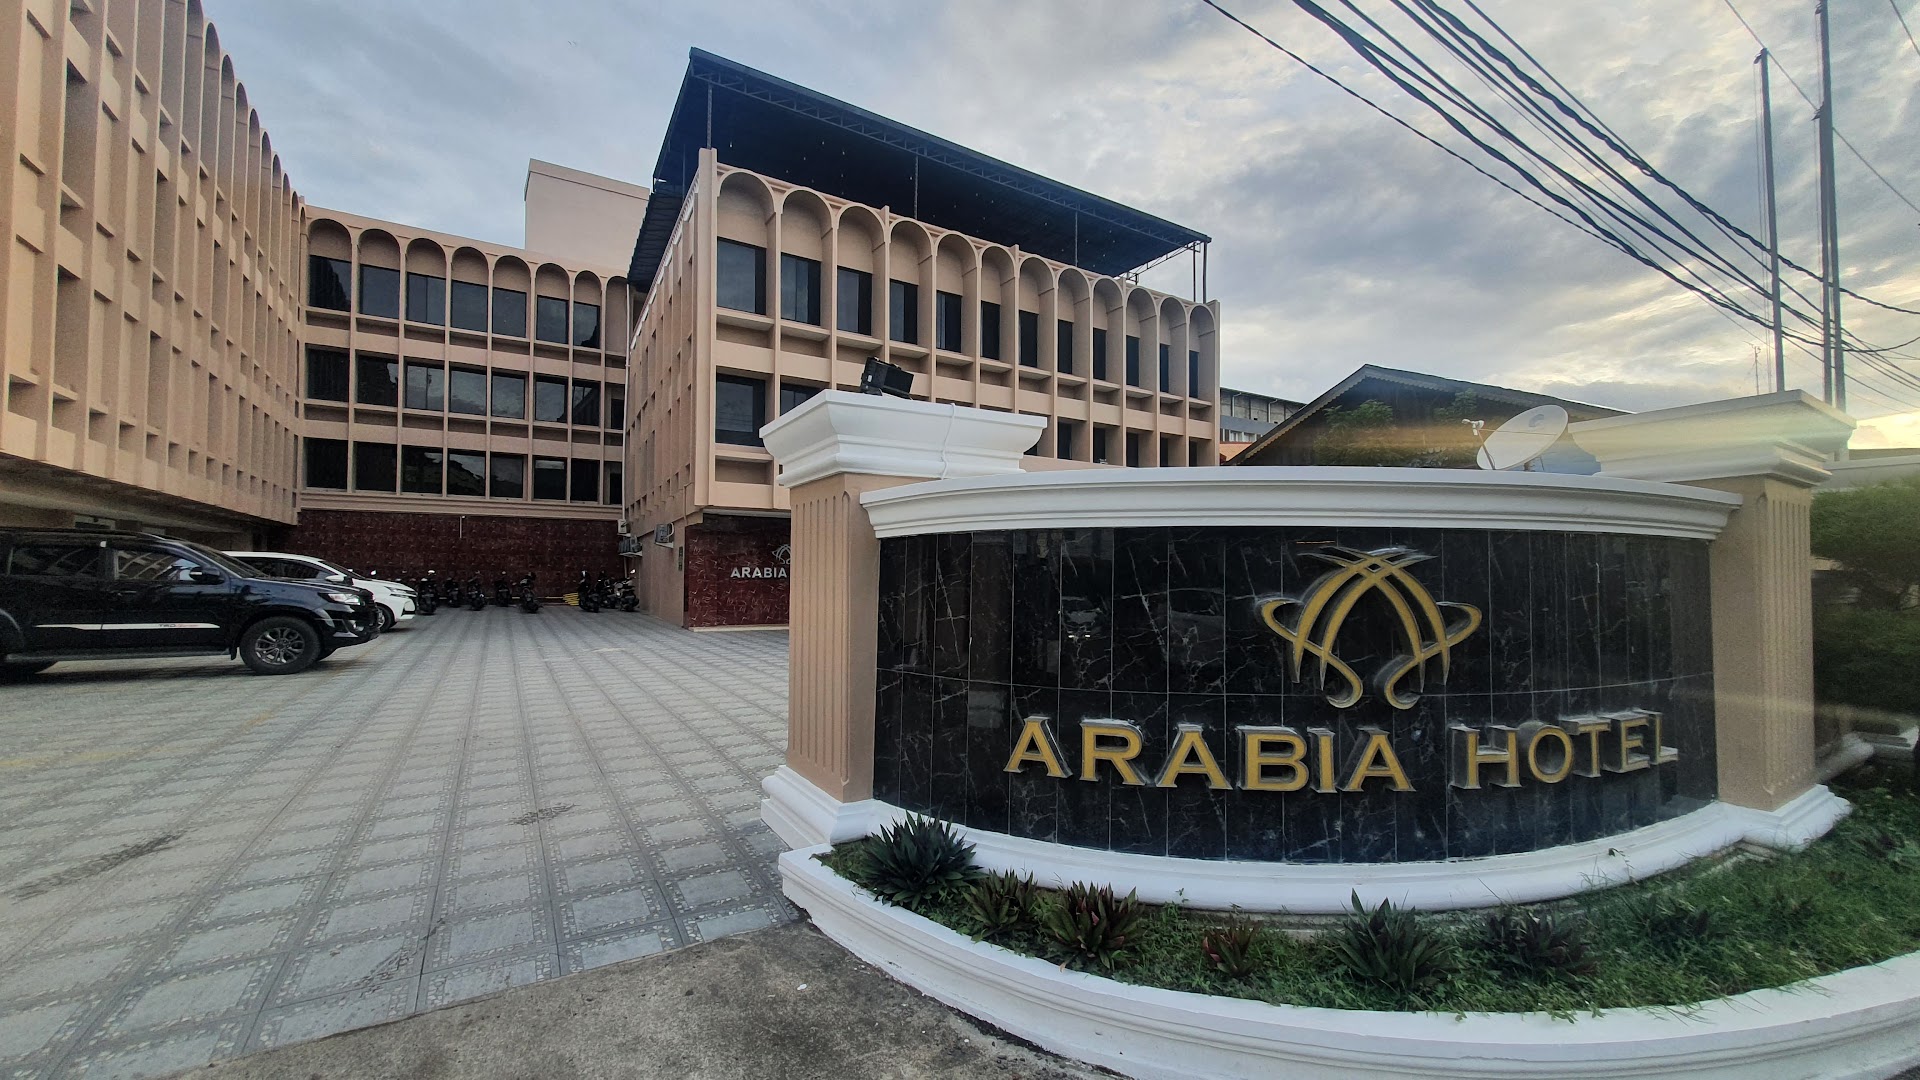 Gambar Arabia Hotel